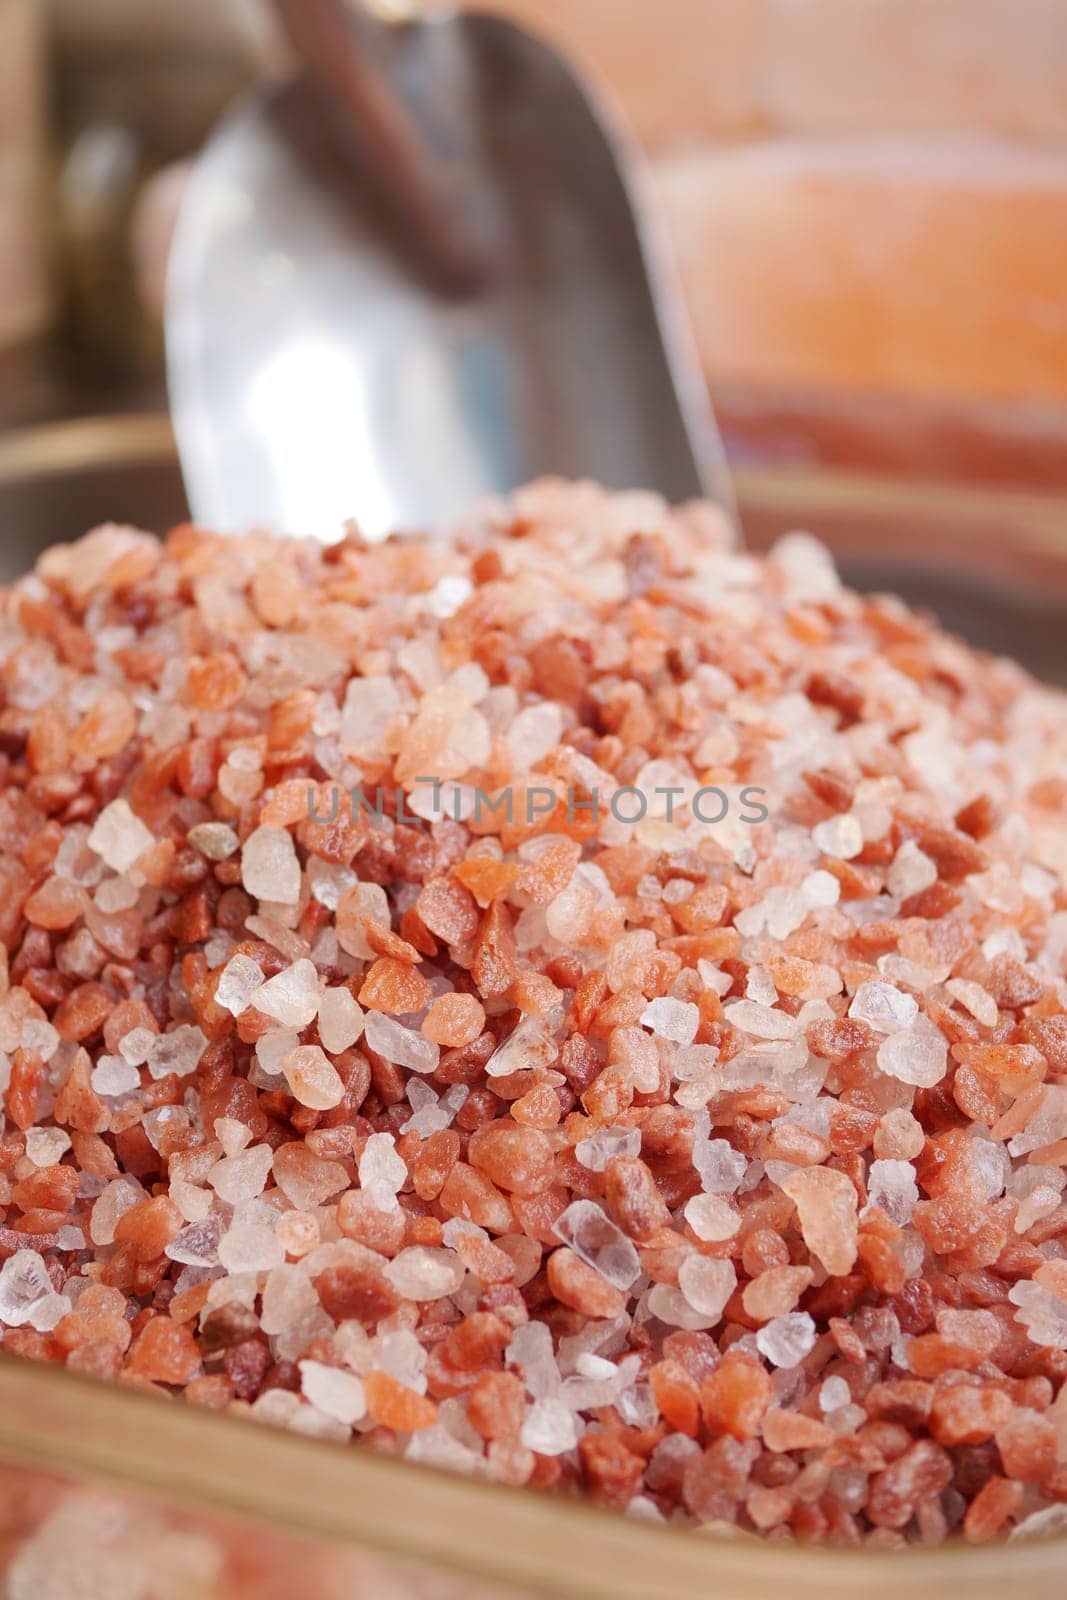 Raw dried pink Himalayan salt by towfiq007